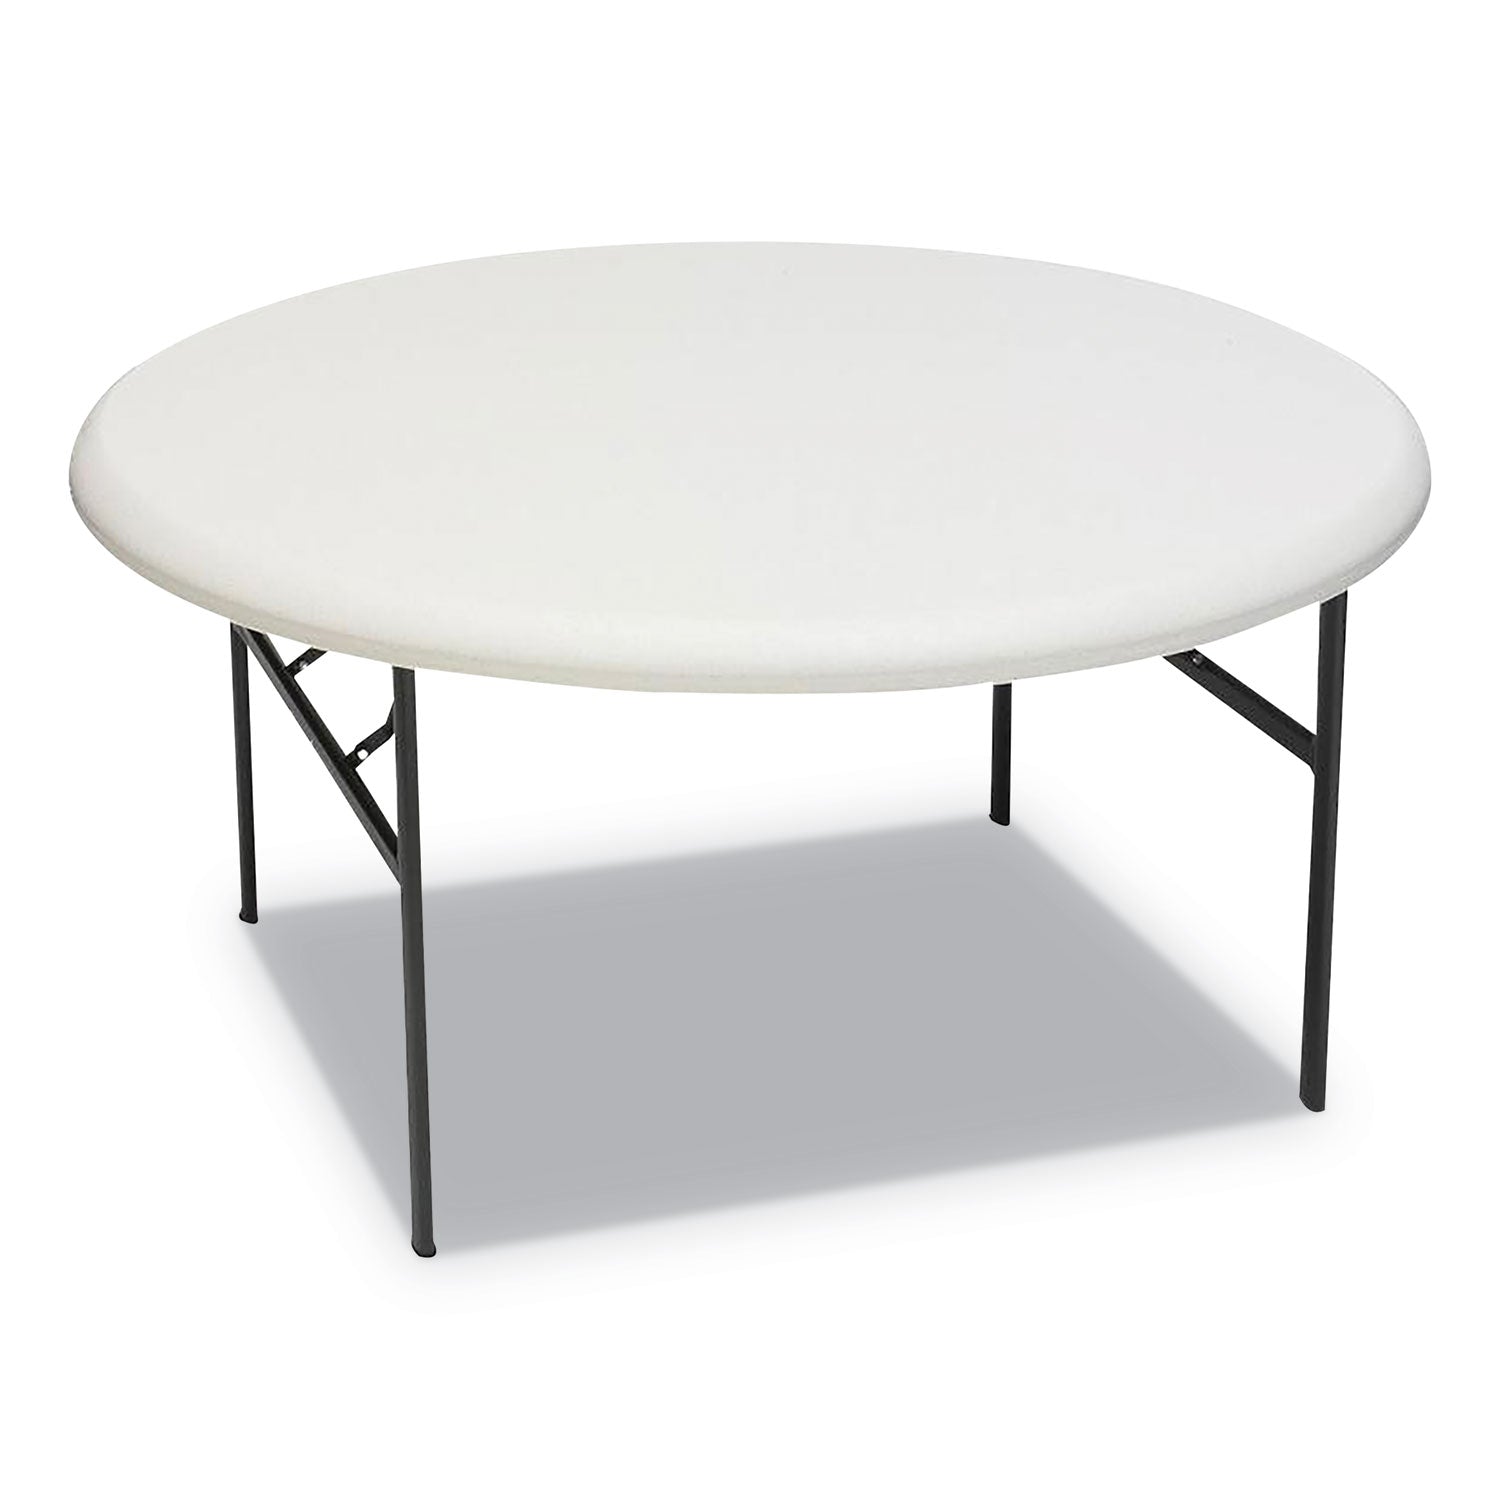 IndestrucTable Classic Folding Table, Round, 60" x 29", Platinum - 